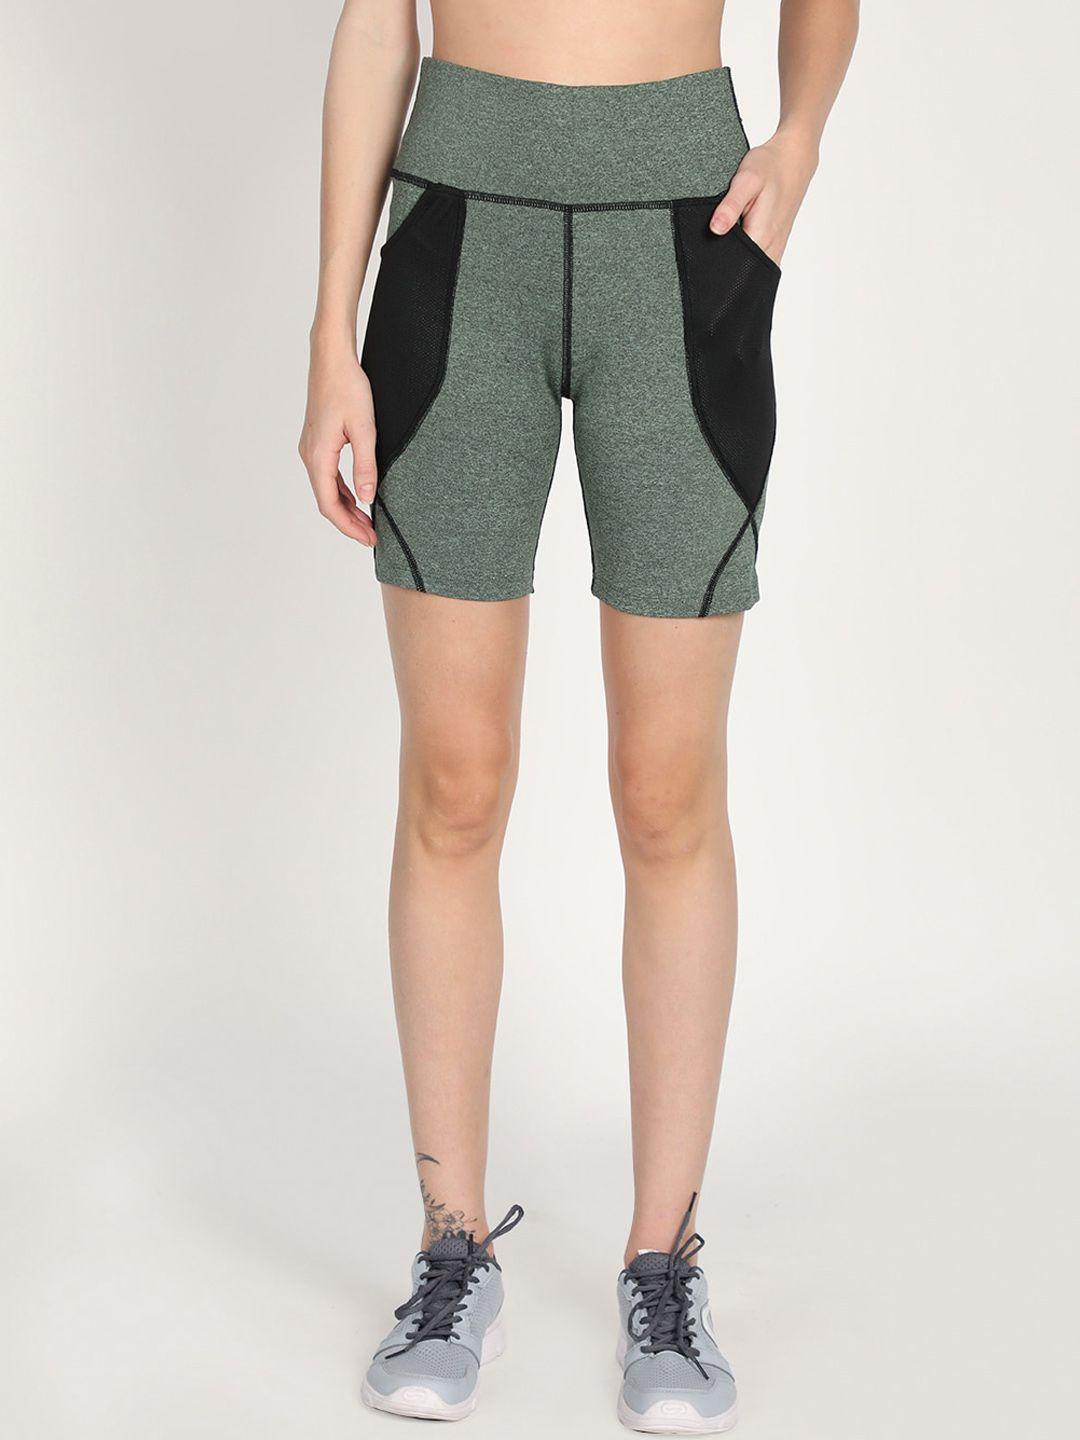 chkokko women colourblocked slip-on slim fit cycling sports shorts